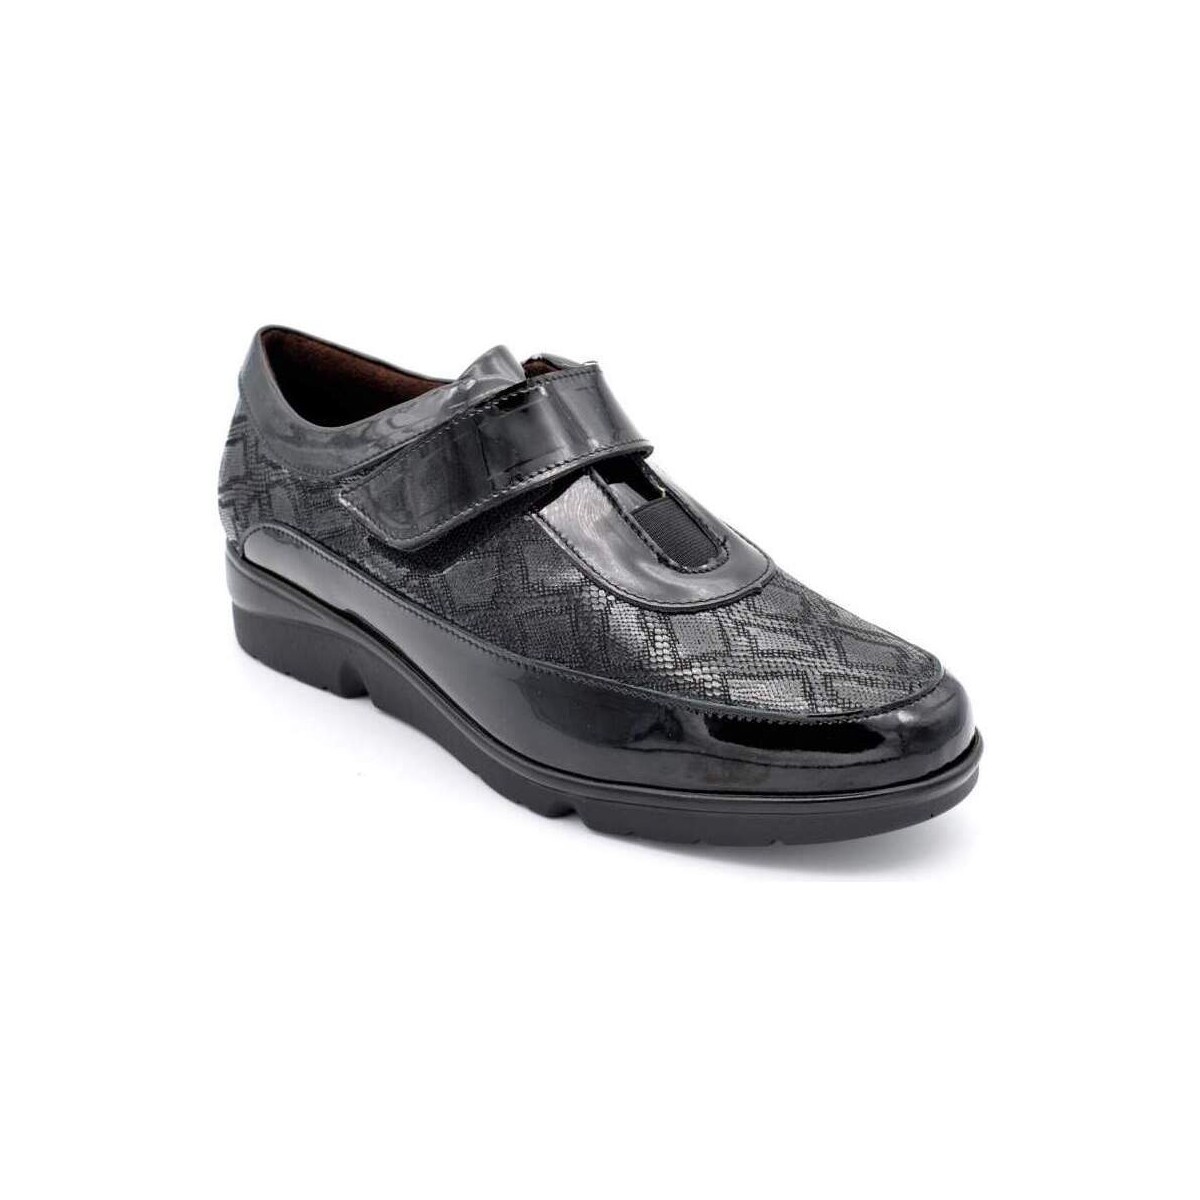 Sapatos Mulher Sapatos & Richelieu Pitillos 5303 Preto